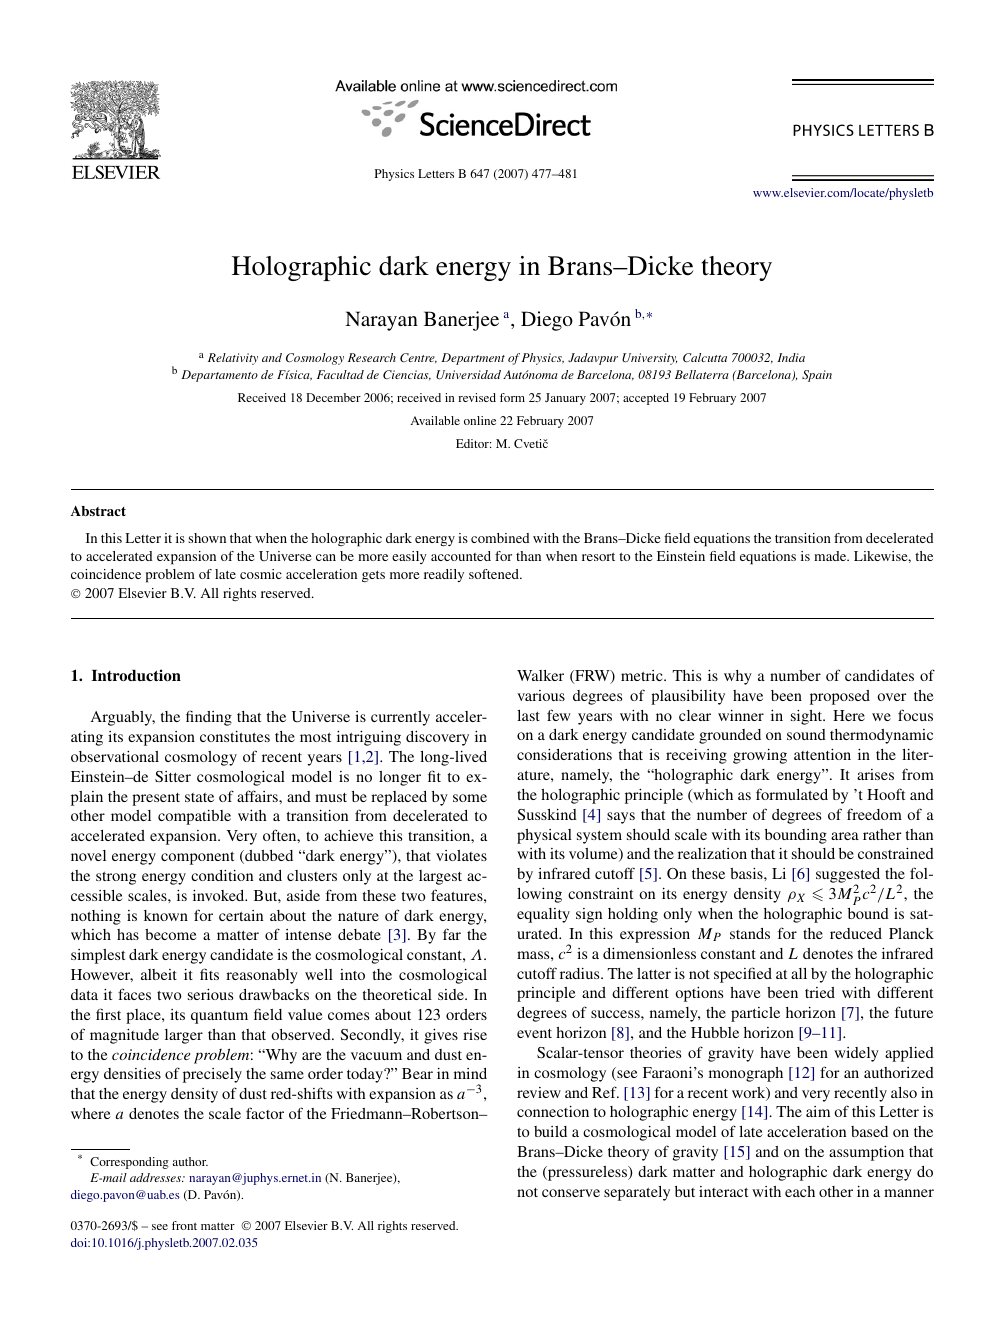 dark energy research paper